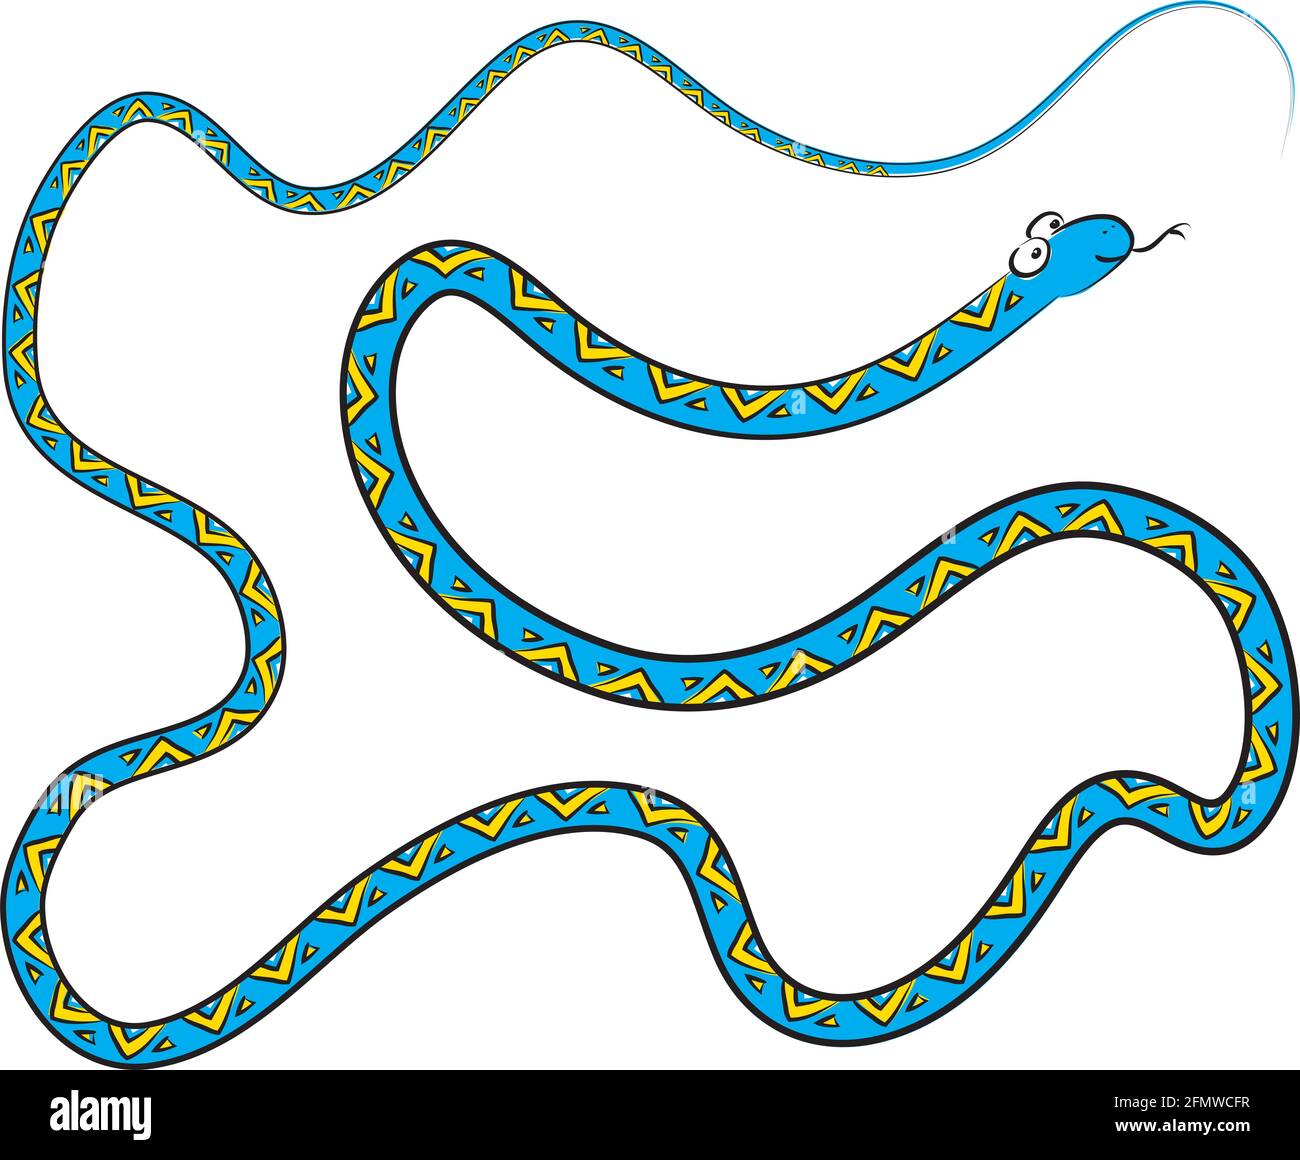 long cartoon snakes